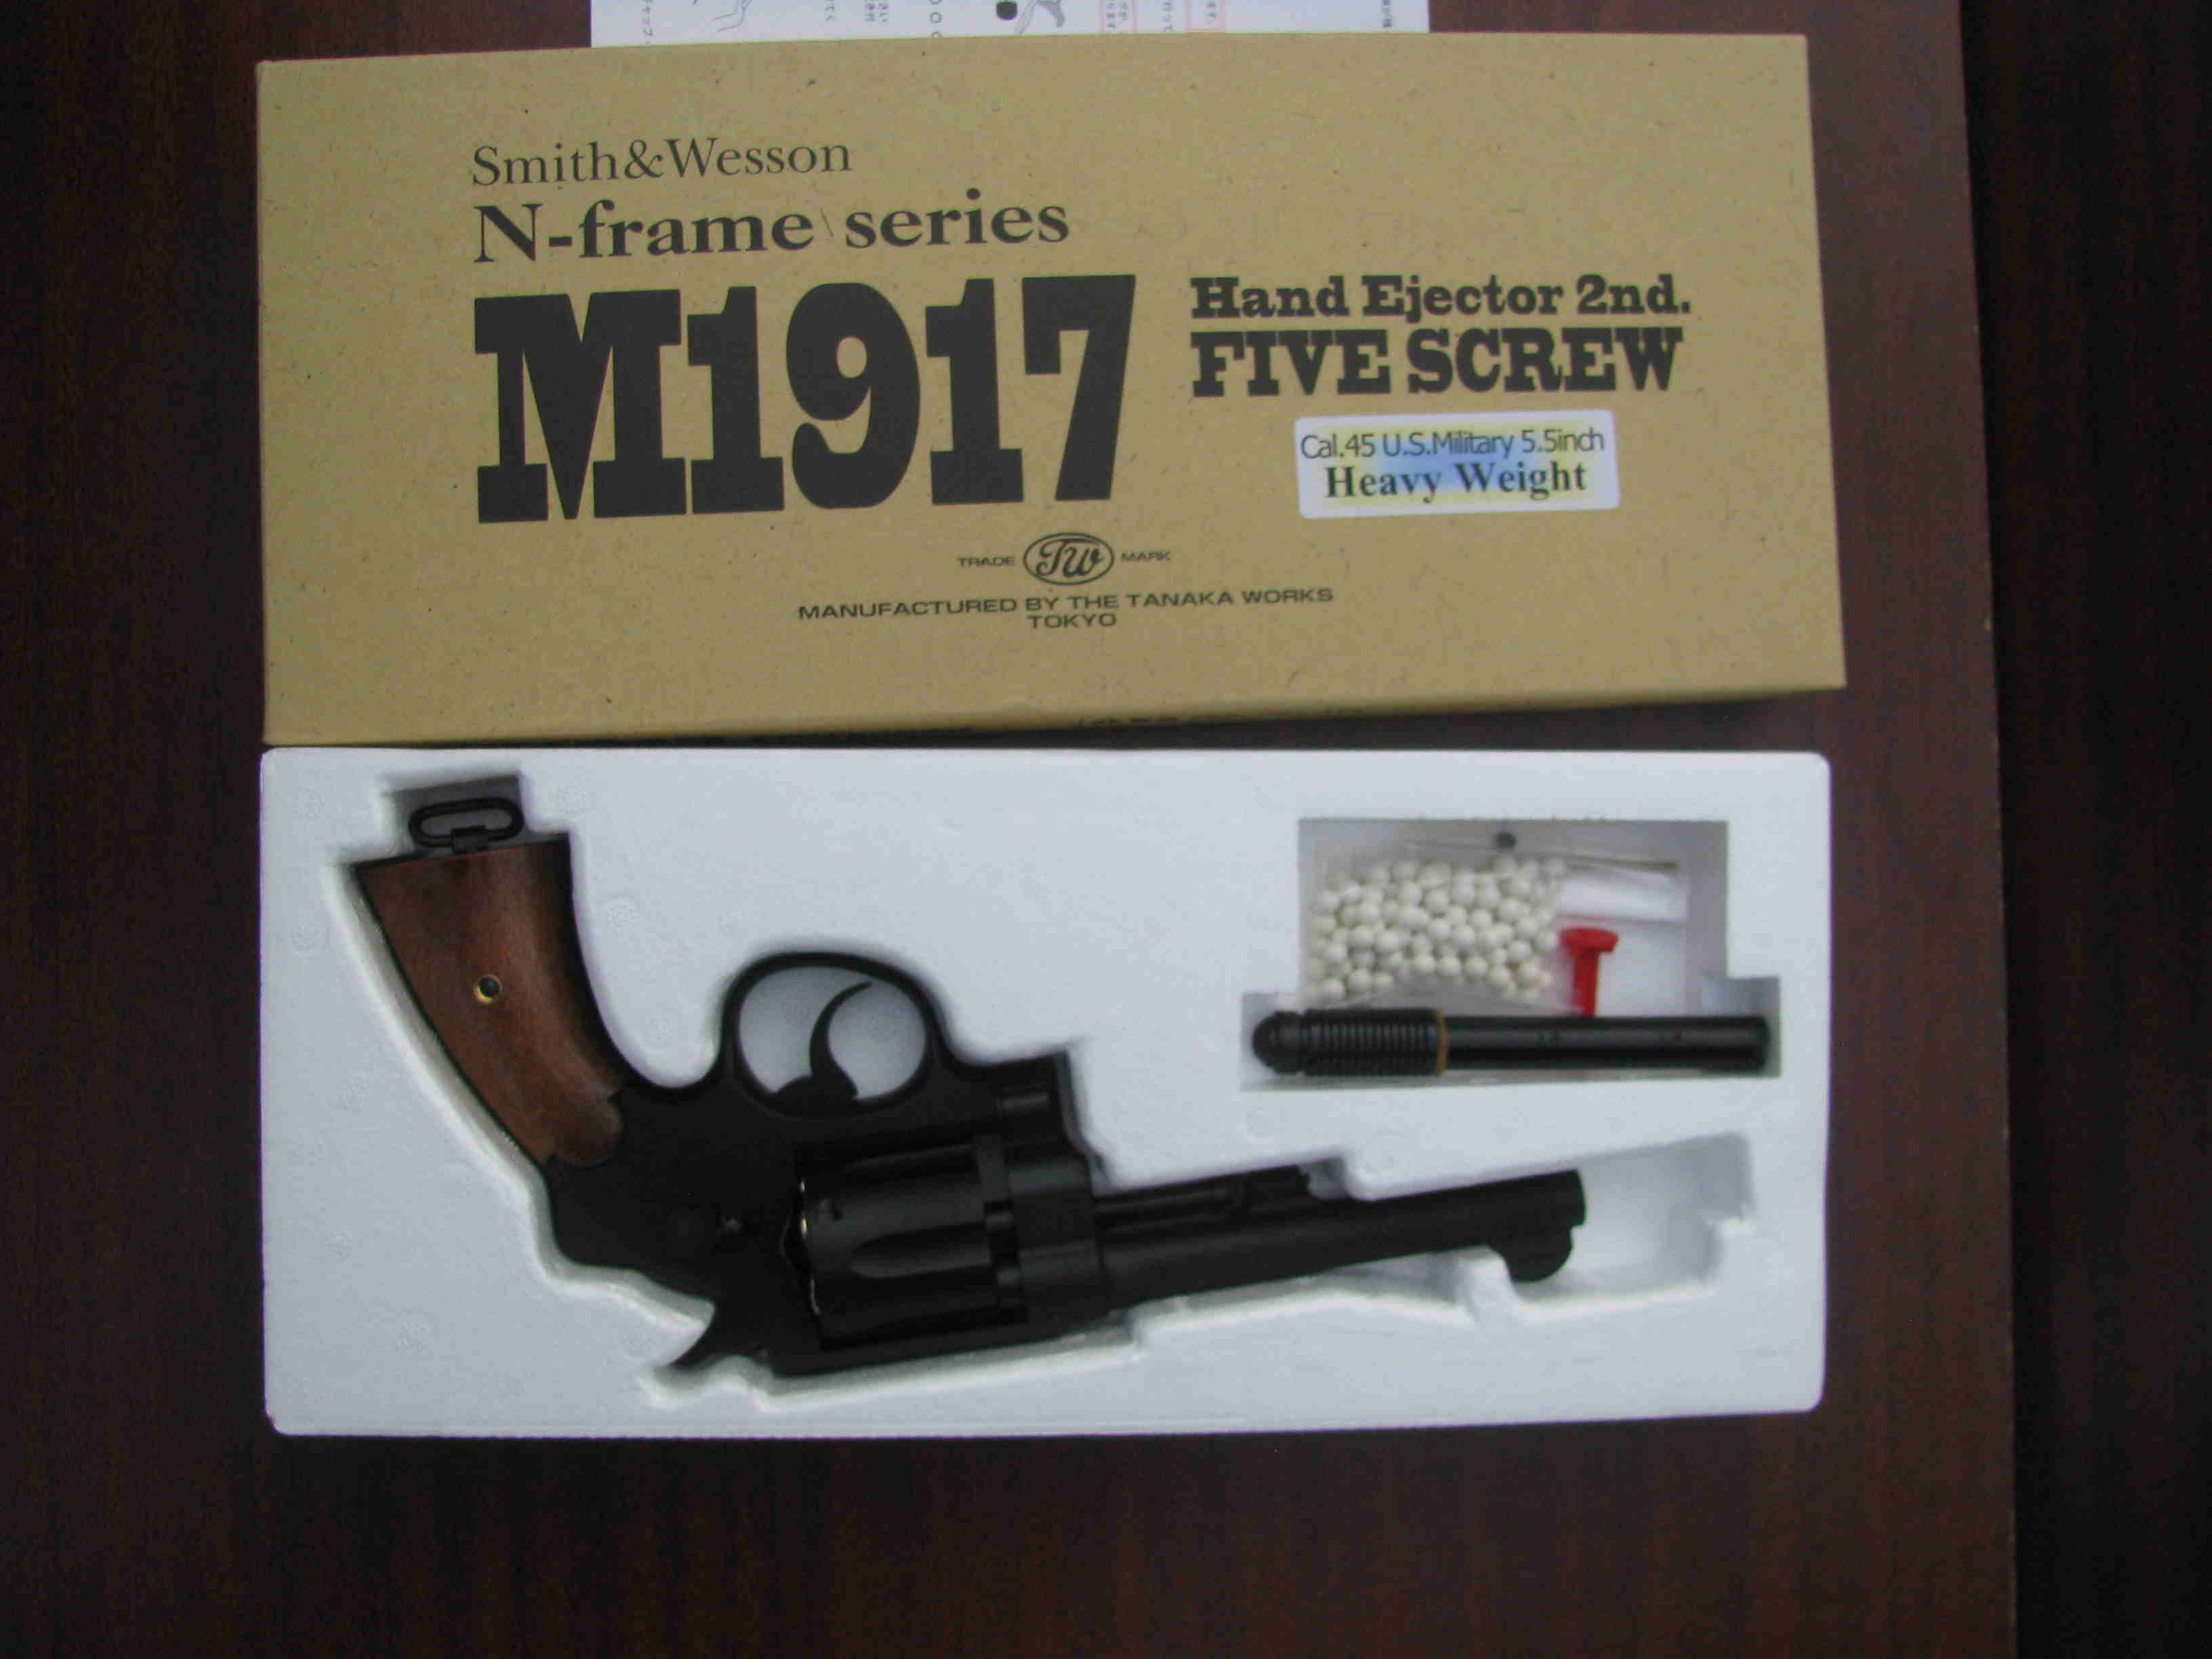 Smith & Wesson, S&W, S&W M1917, Smith & Wesson Model 1917 страйкбольный, Смит Вессон 1917